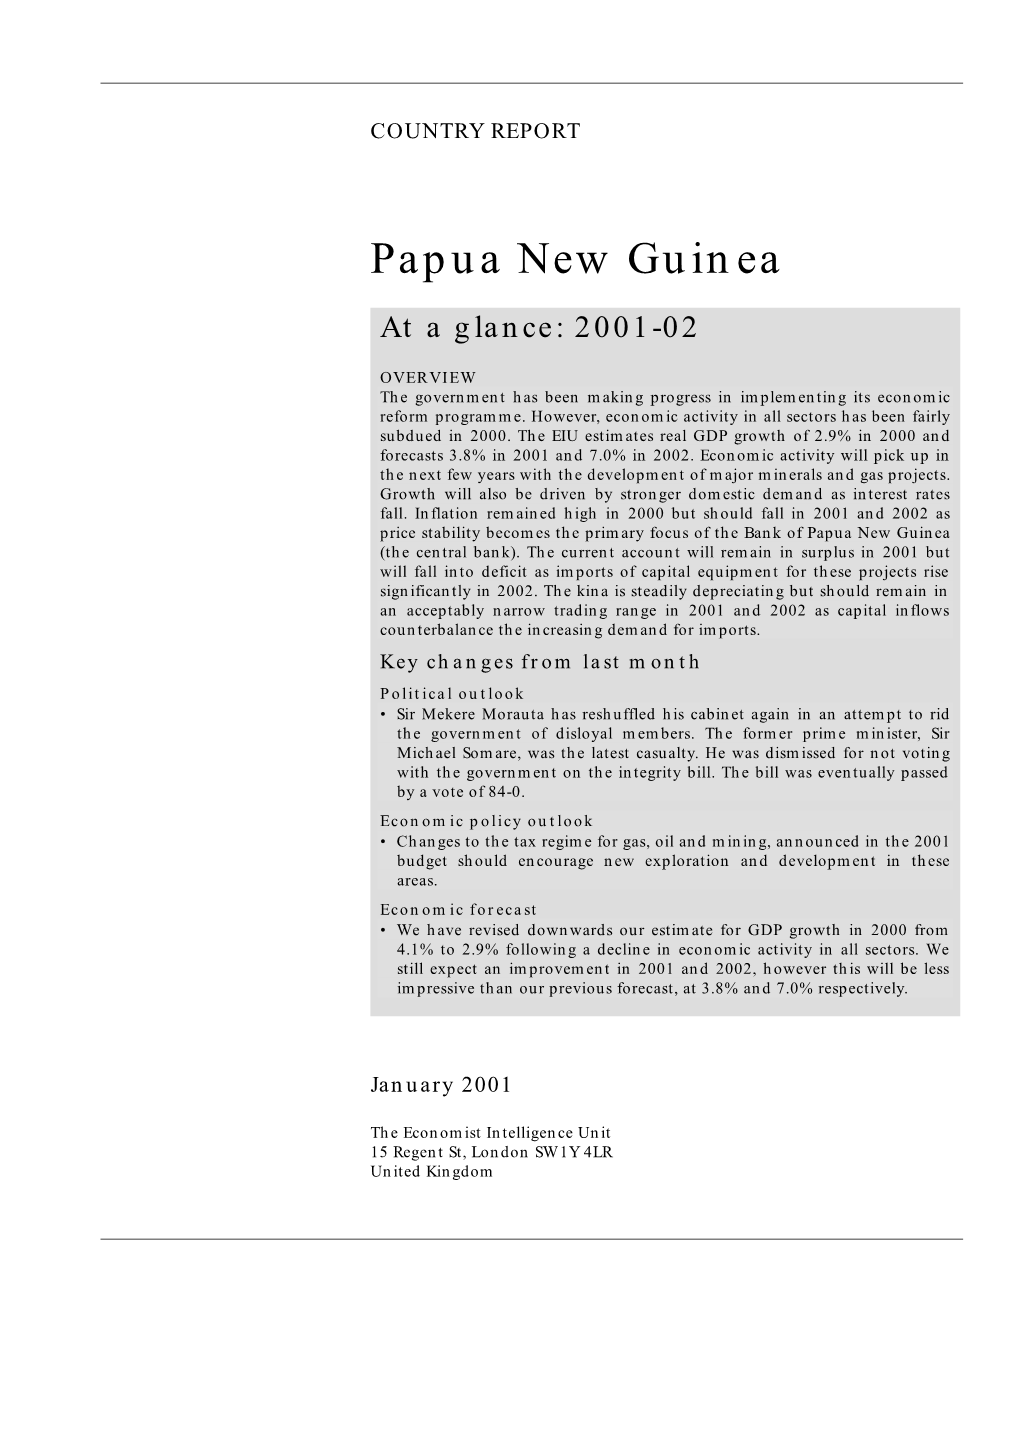 Papua New Guinea at a Glance: 2001-02